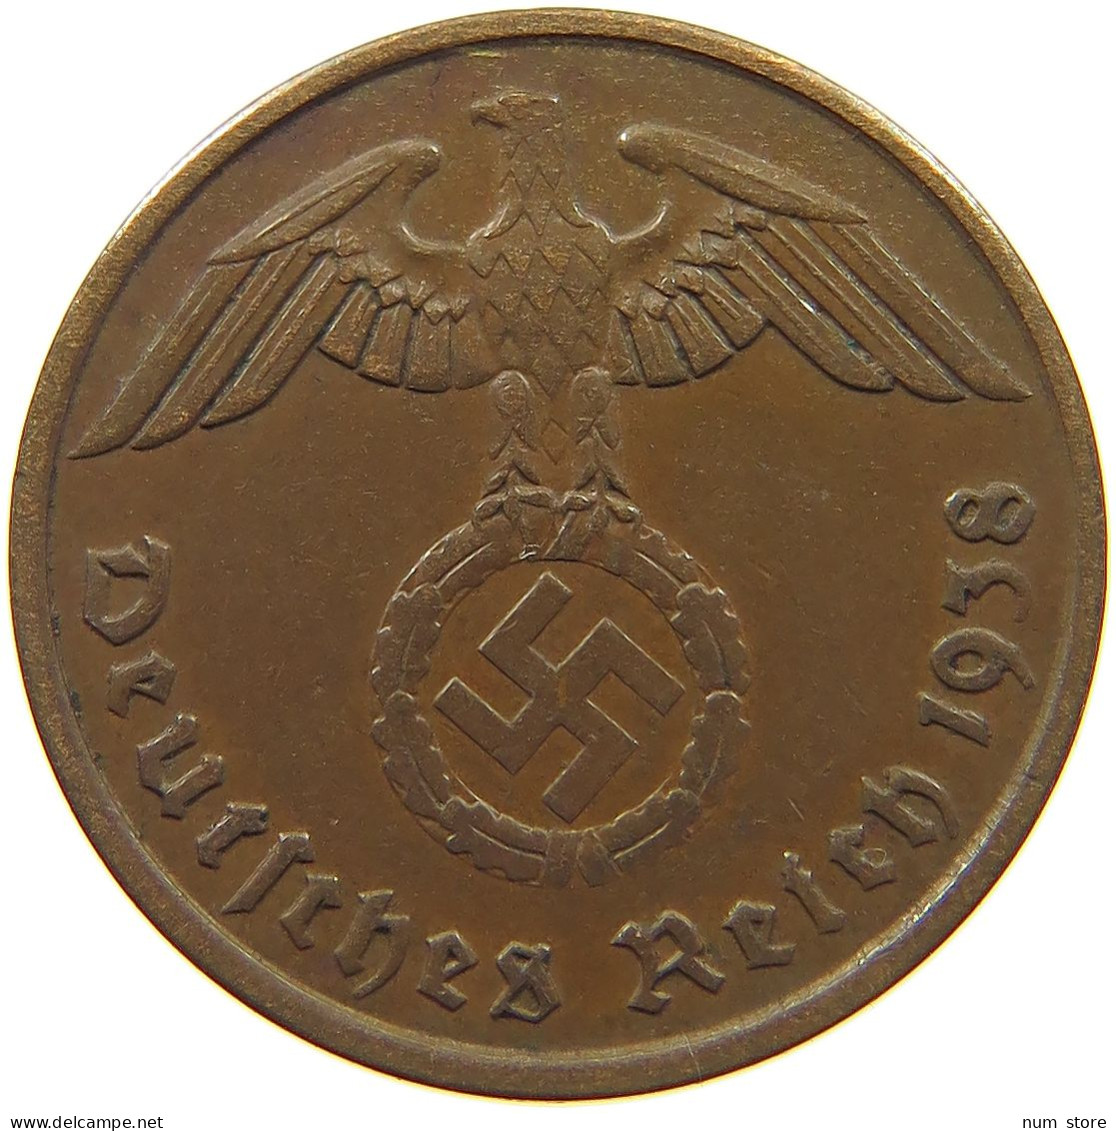 GERMANY 2 PFENNIG 1938 A #c083 0121 - 2 Reichspfennig